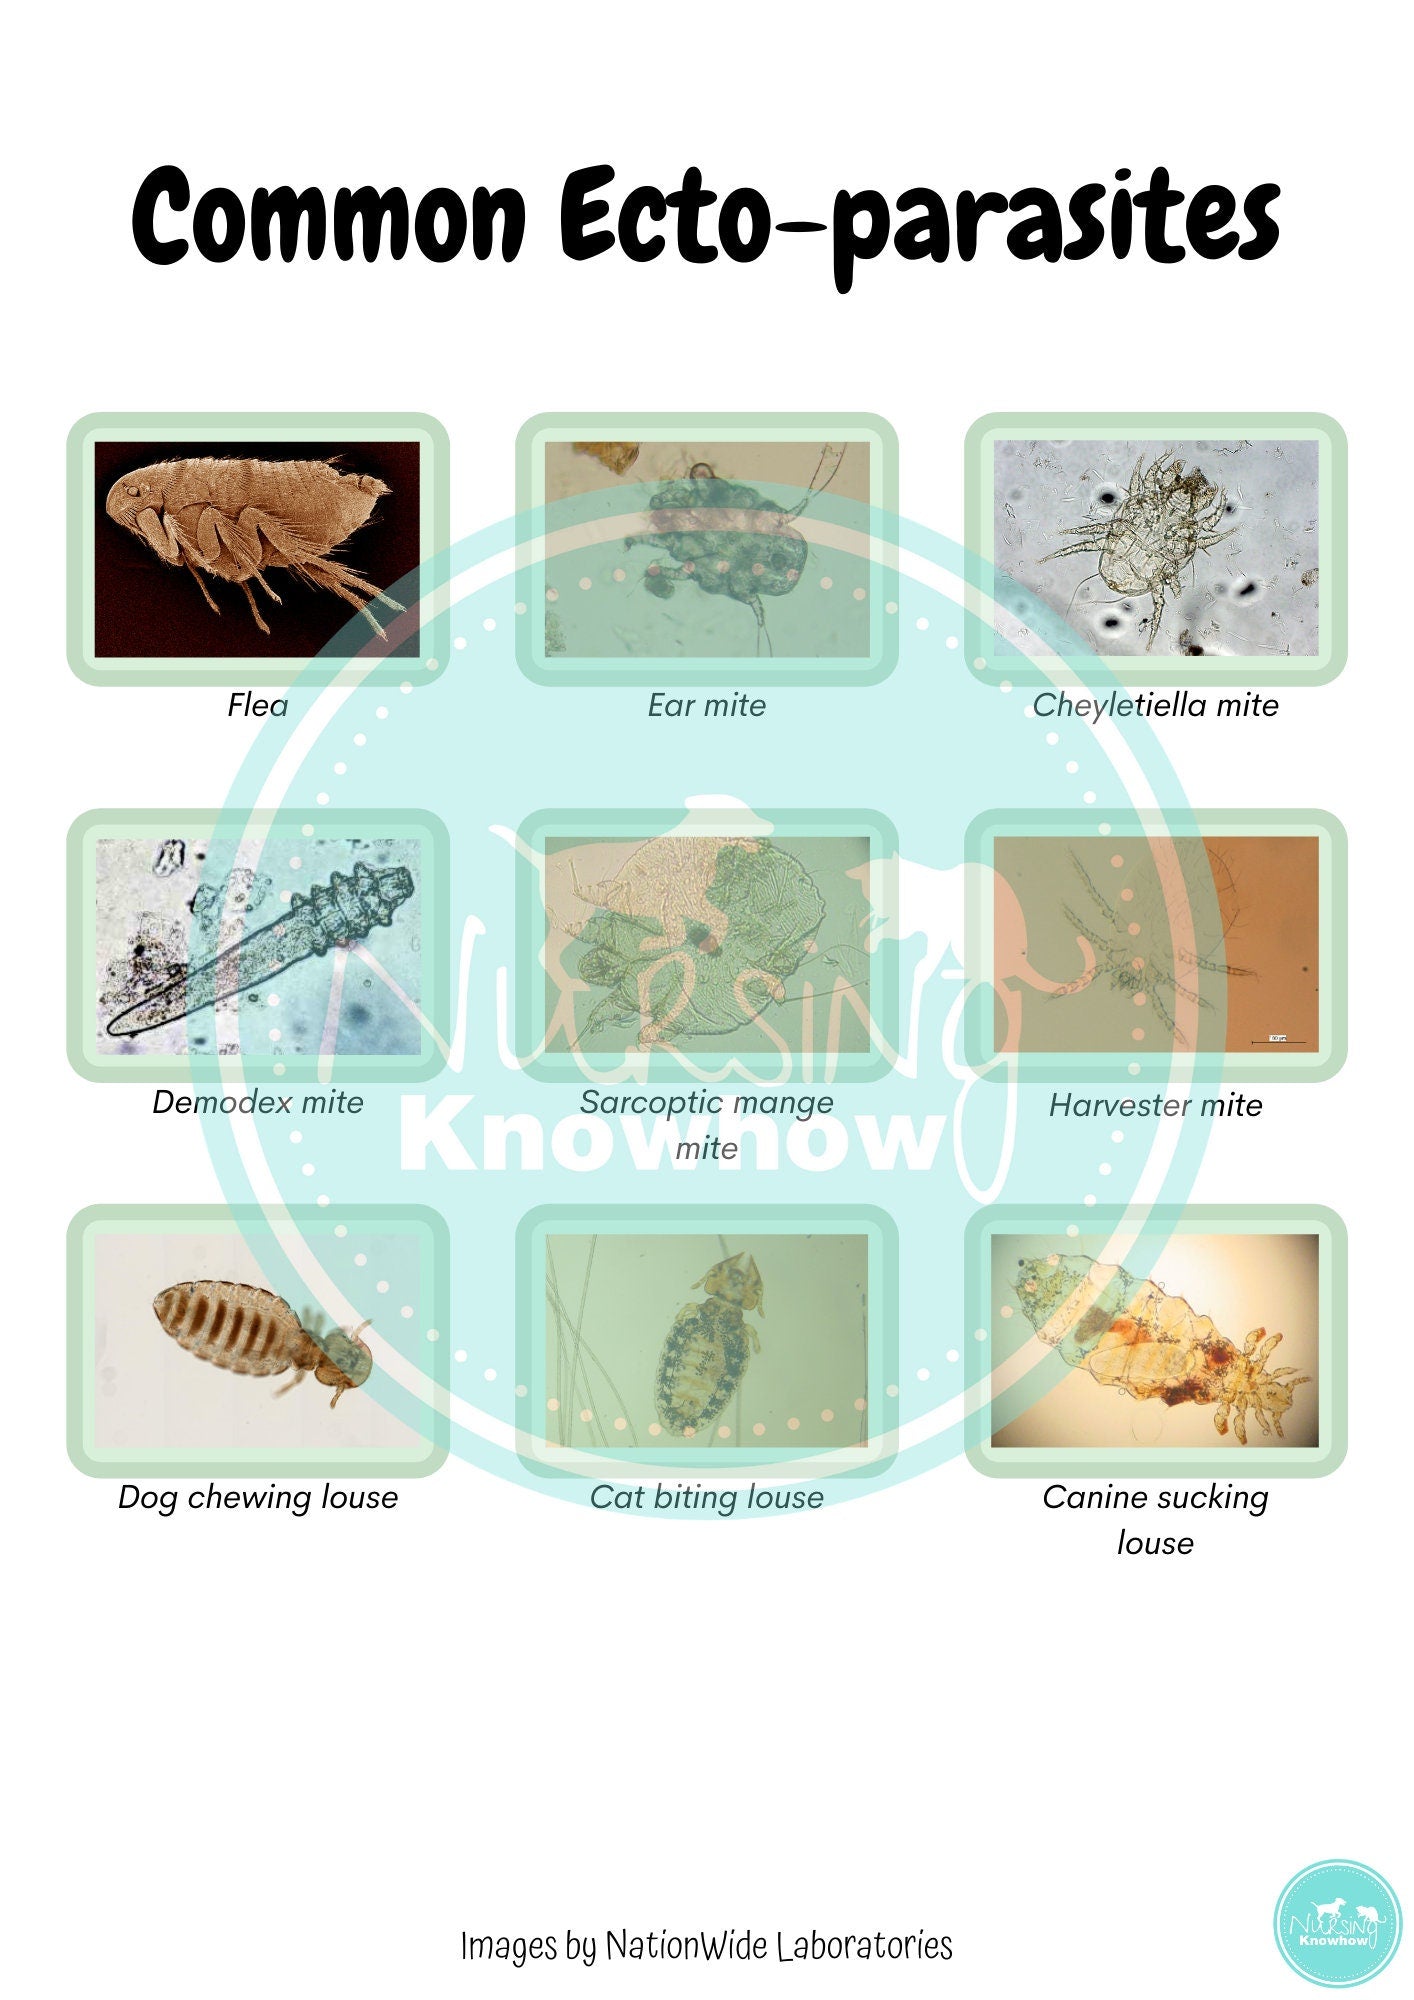 Vet & Vet Nurse Ecto-parasite Information Guide (Digital download) - Nursing Knowhow